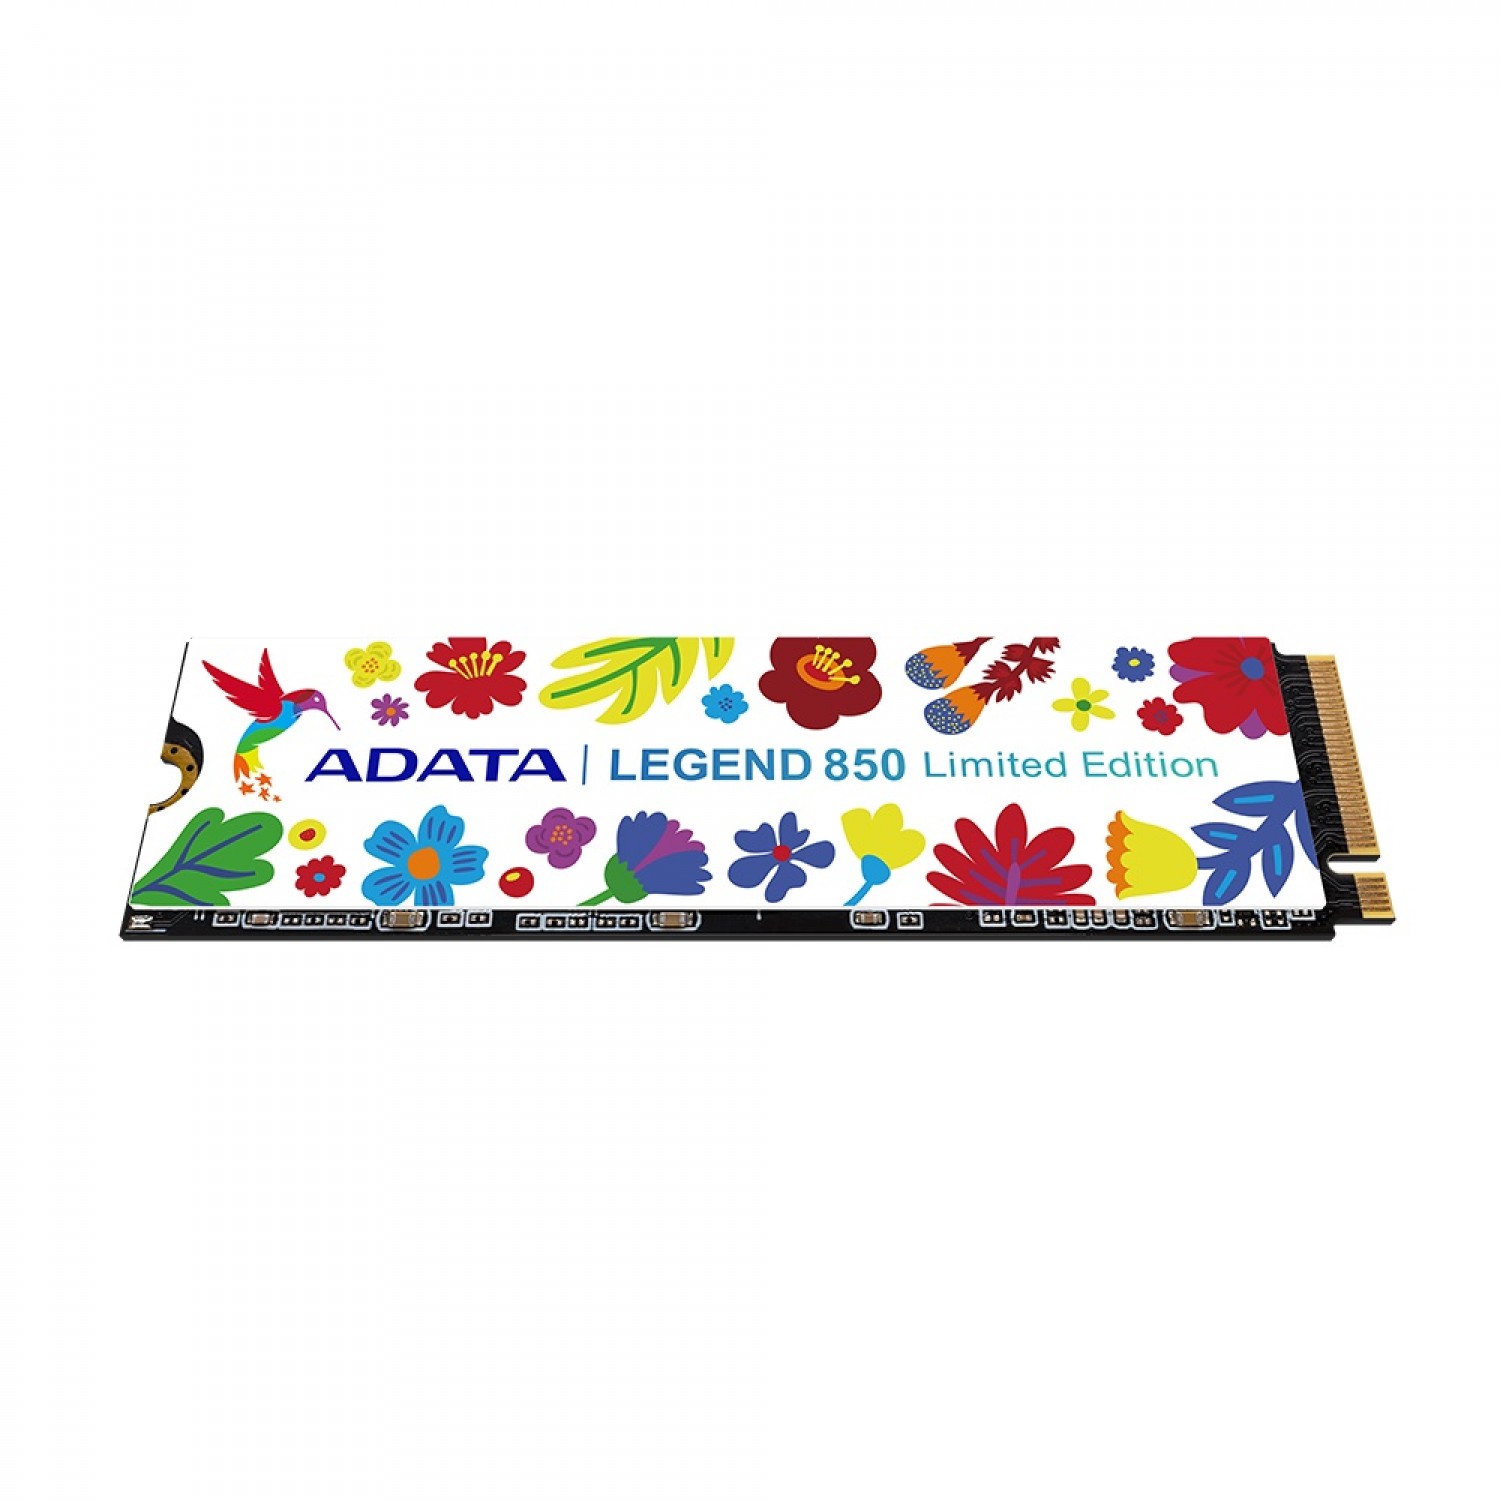 حافظه اس اس دی ADATA Legend 850 512GB Limited Edition-5